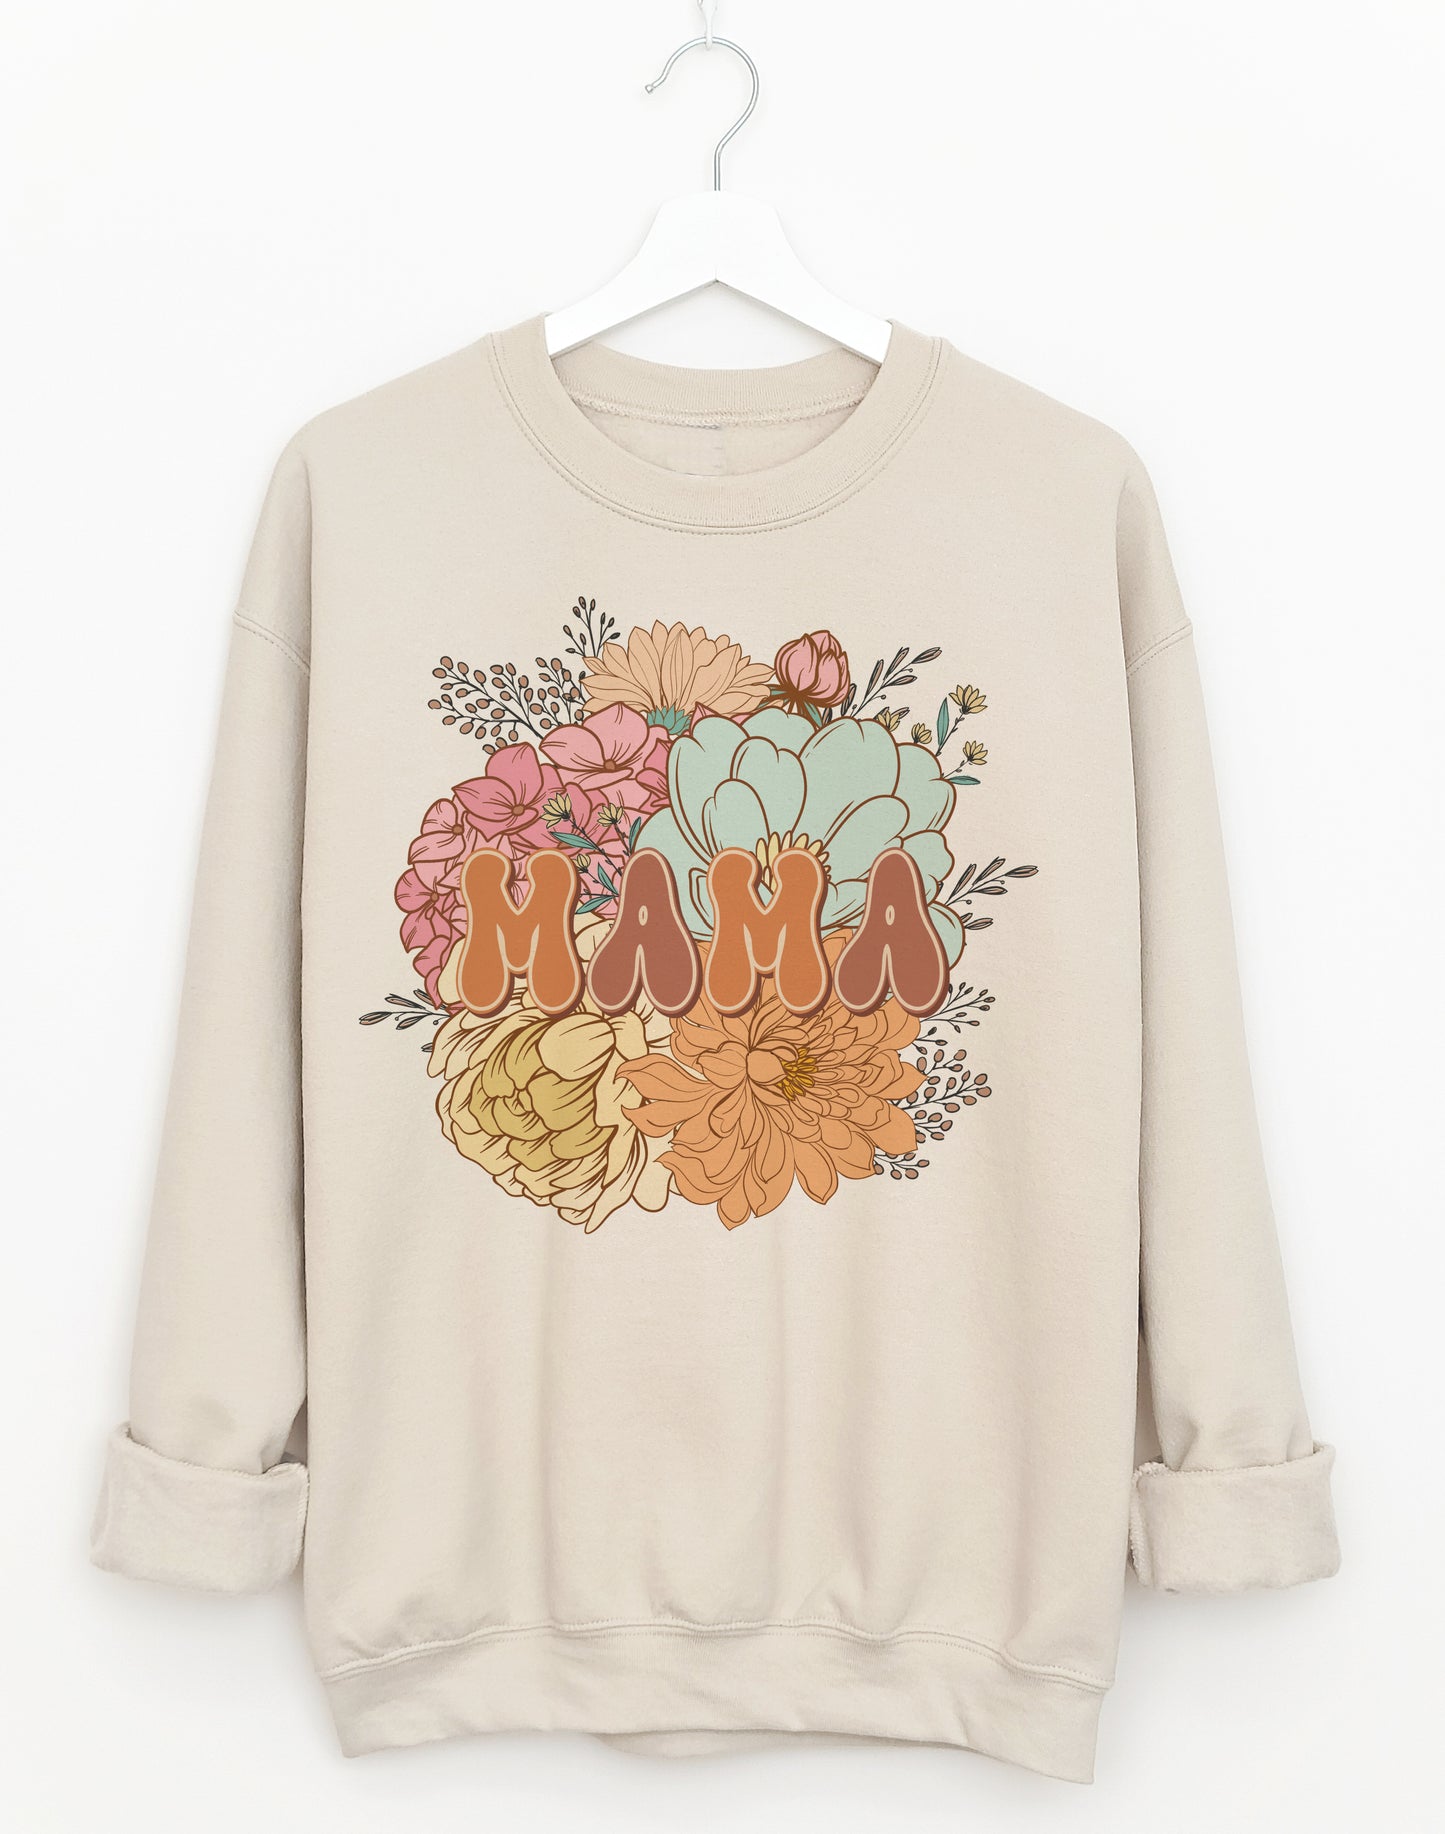 Mama Floral Softstyle Bella Canvas Sweatshirt - Super Soft Bella Sweatshirt/ Easter Mothers Day Sweatshirt